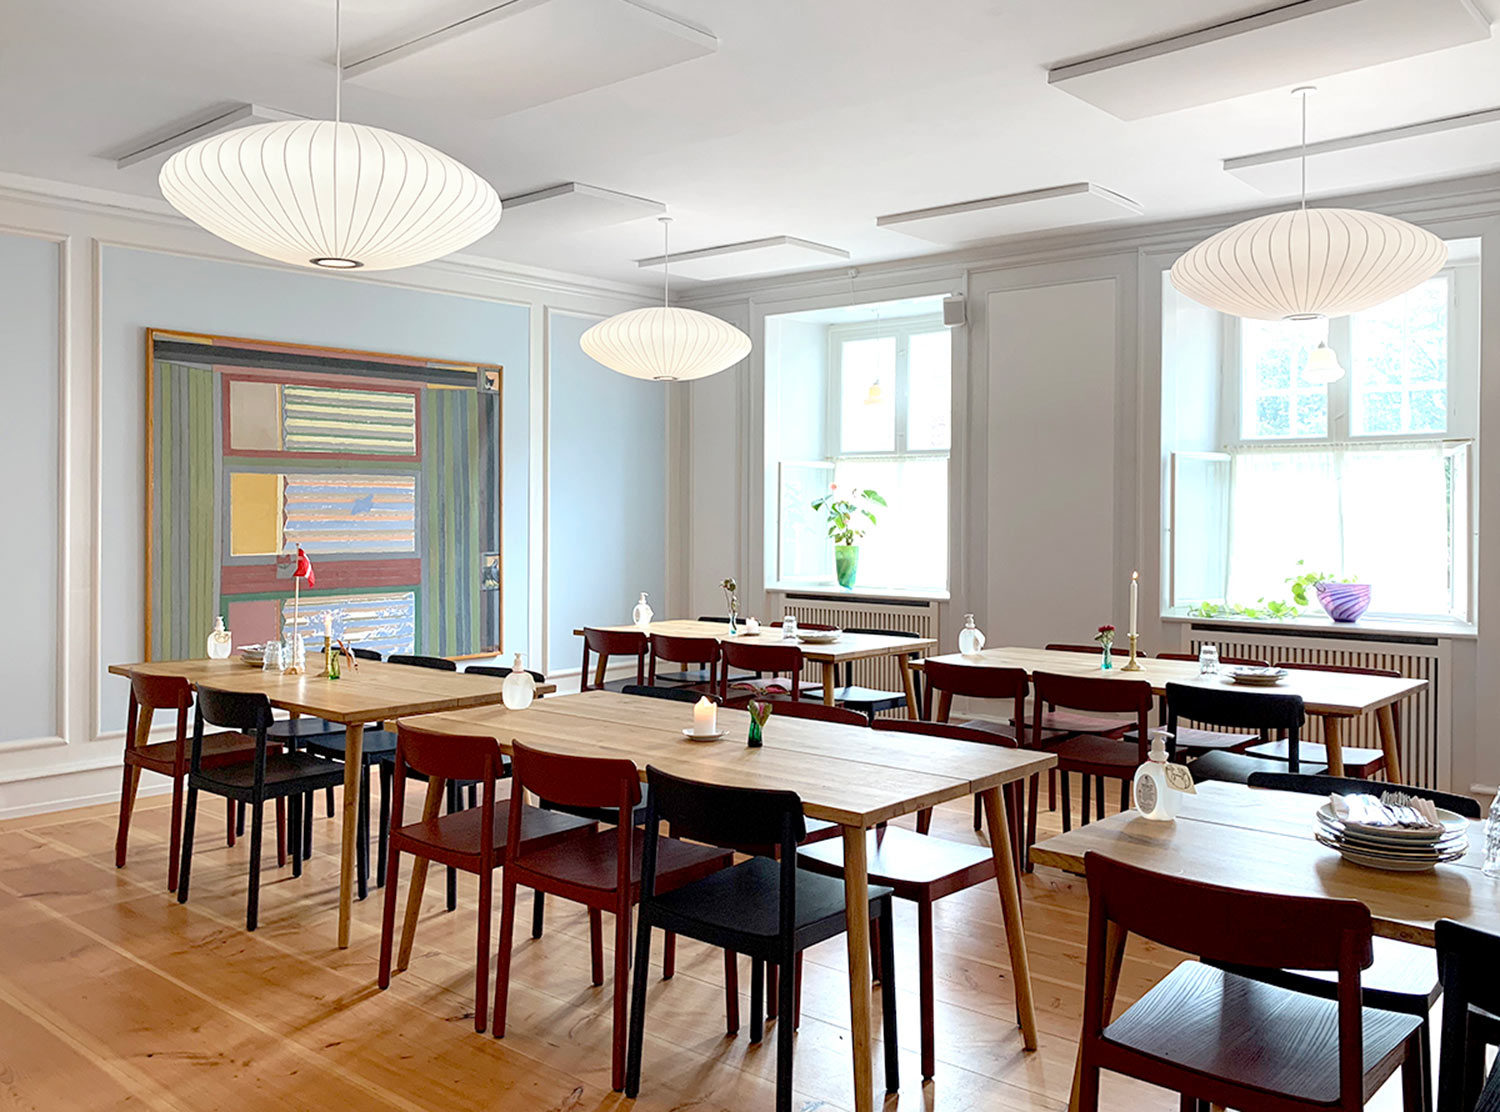 Kanalhuset Kanalhuset's dining room, where it hosts communal dinners each night